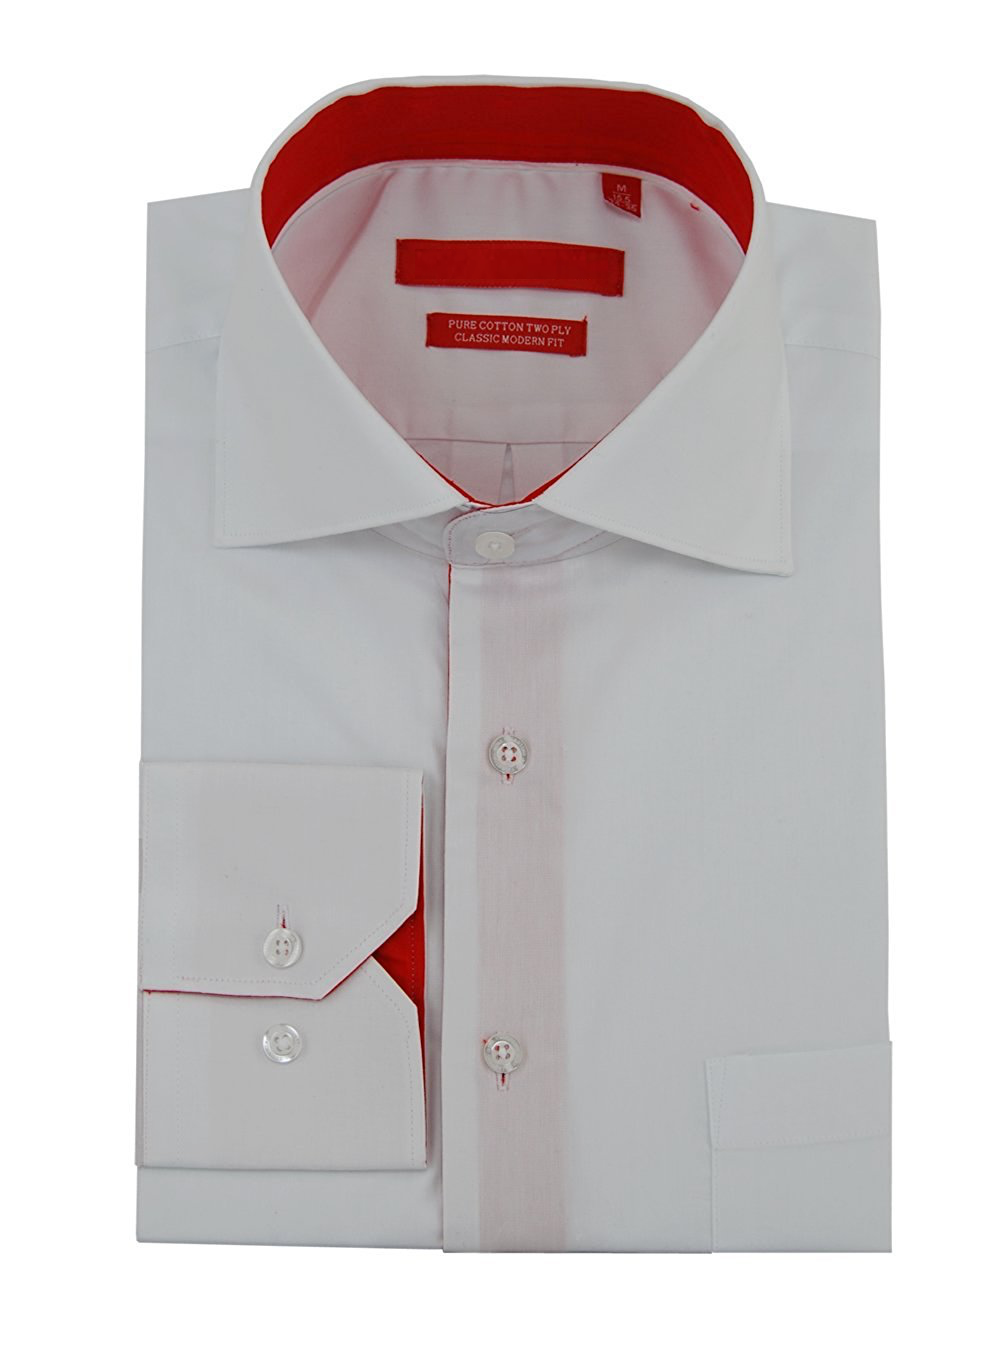 DTI GV Executive Mens 100% Cotton Barrel Cuff Dress Shirt | eBay